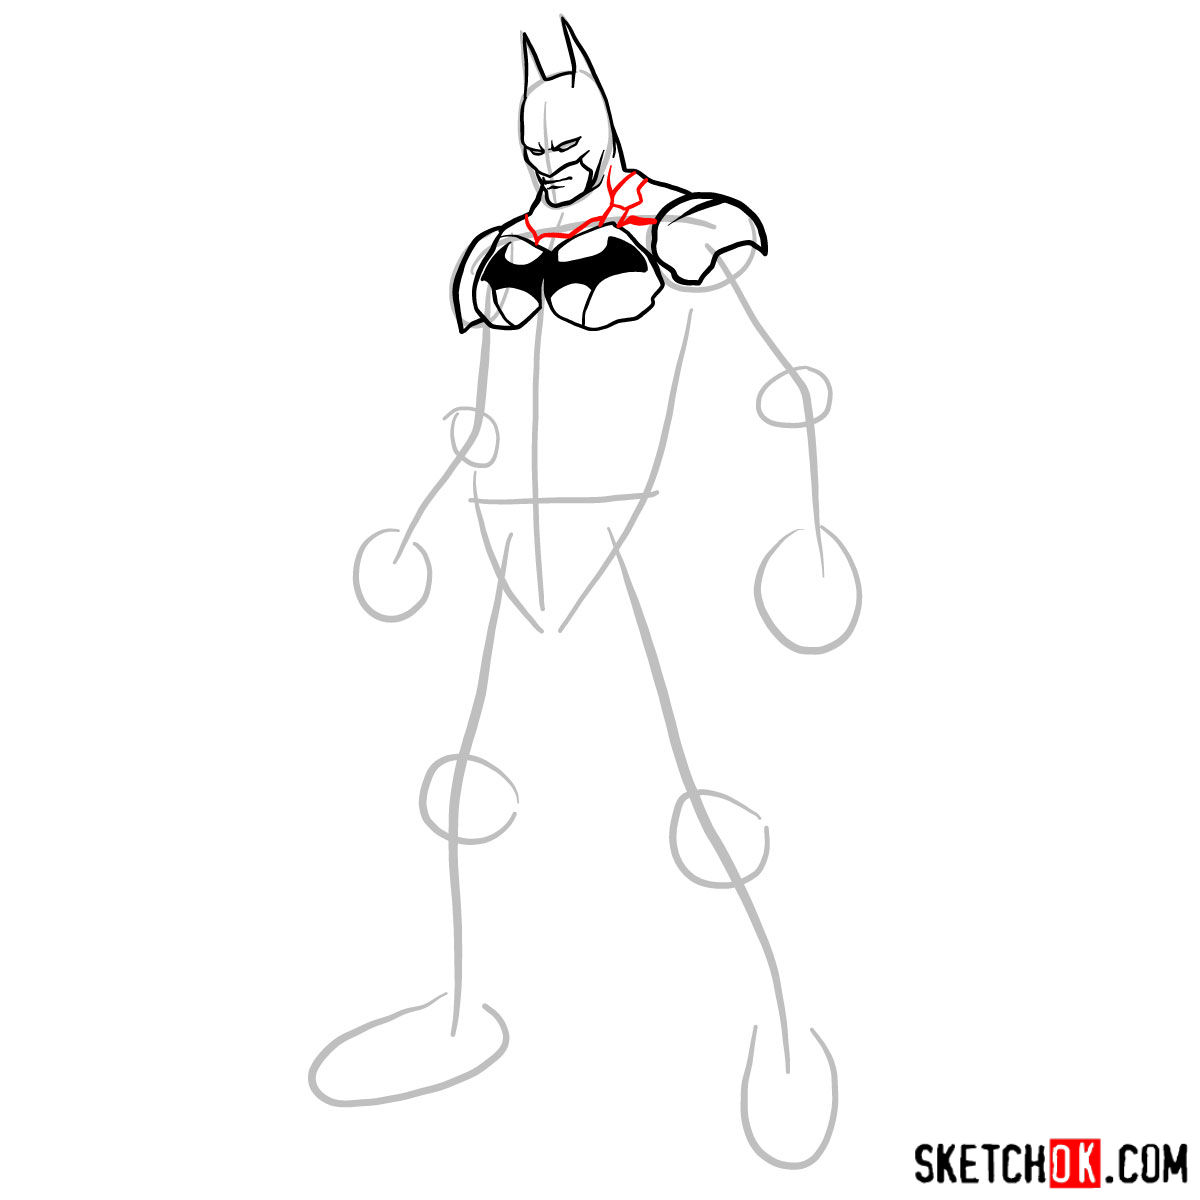 How to draw Batman the Dark Knight - step 06